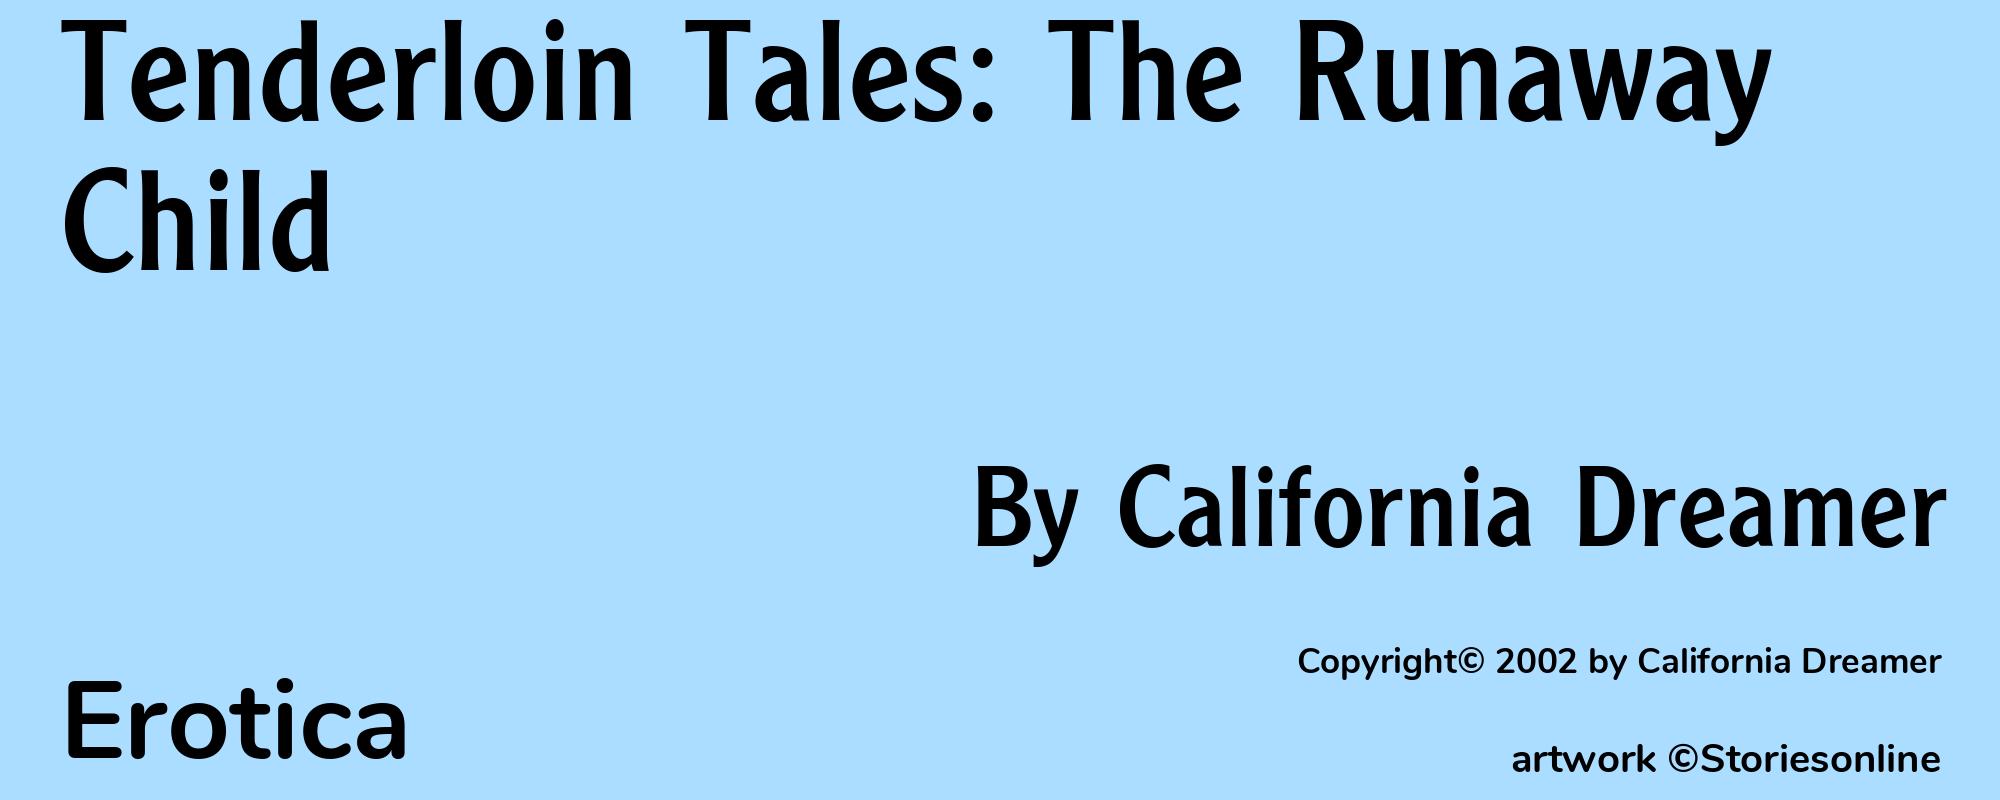 Tenderloin Tales: The Runaway Child - Cover